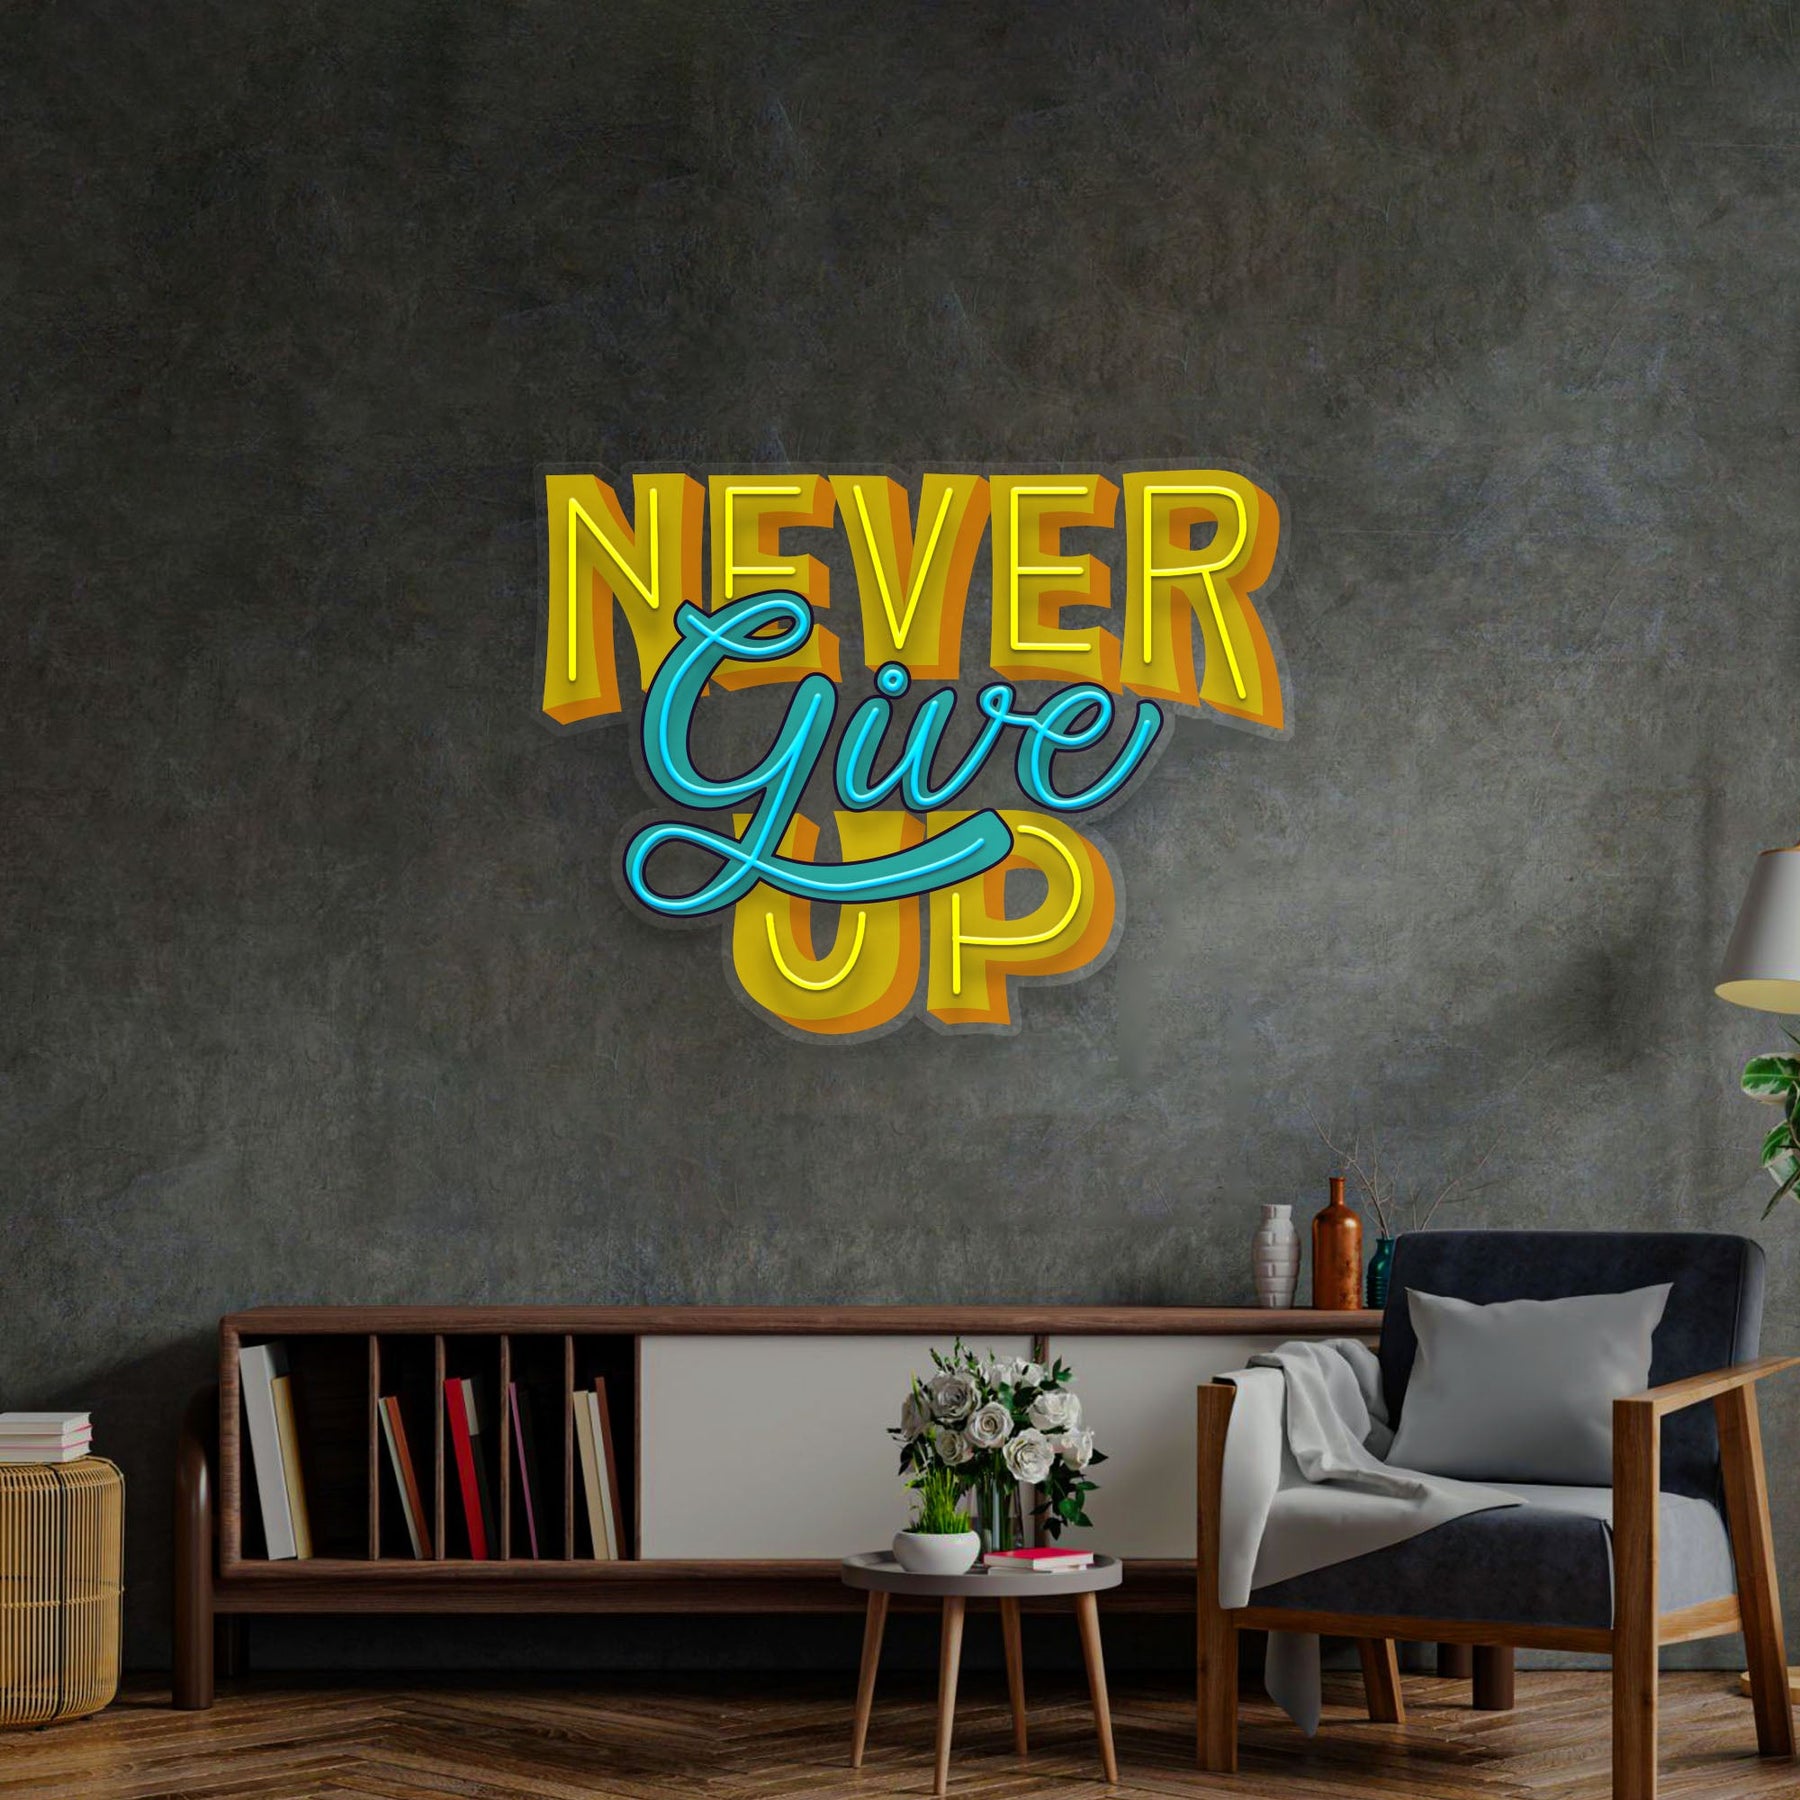 Never Give Up LED Neon Sign Light Pop Art